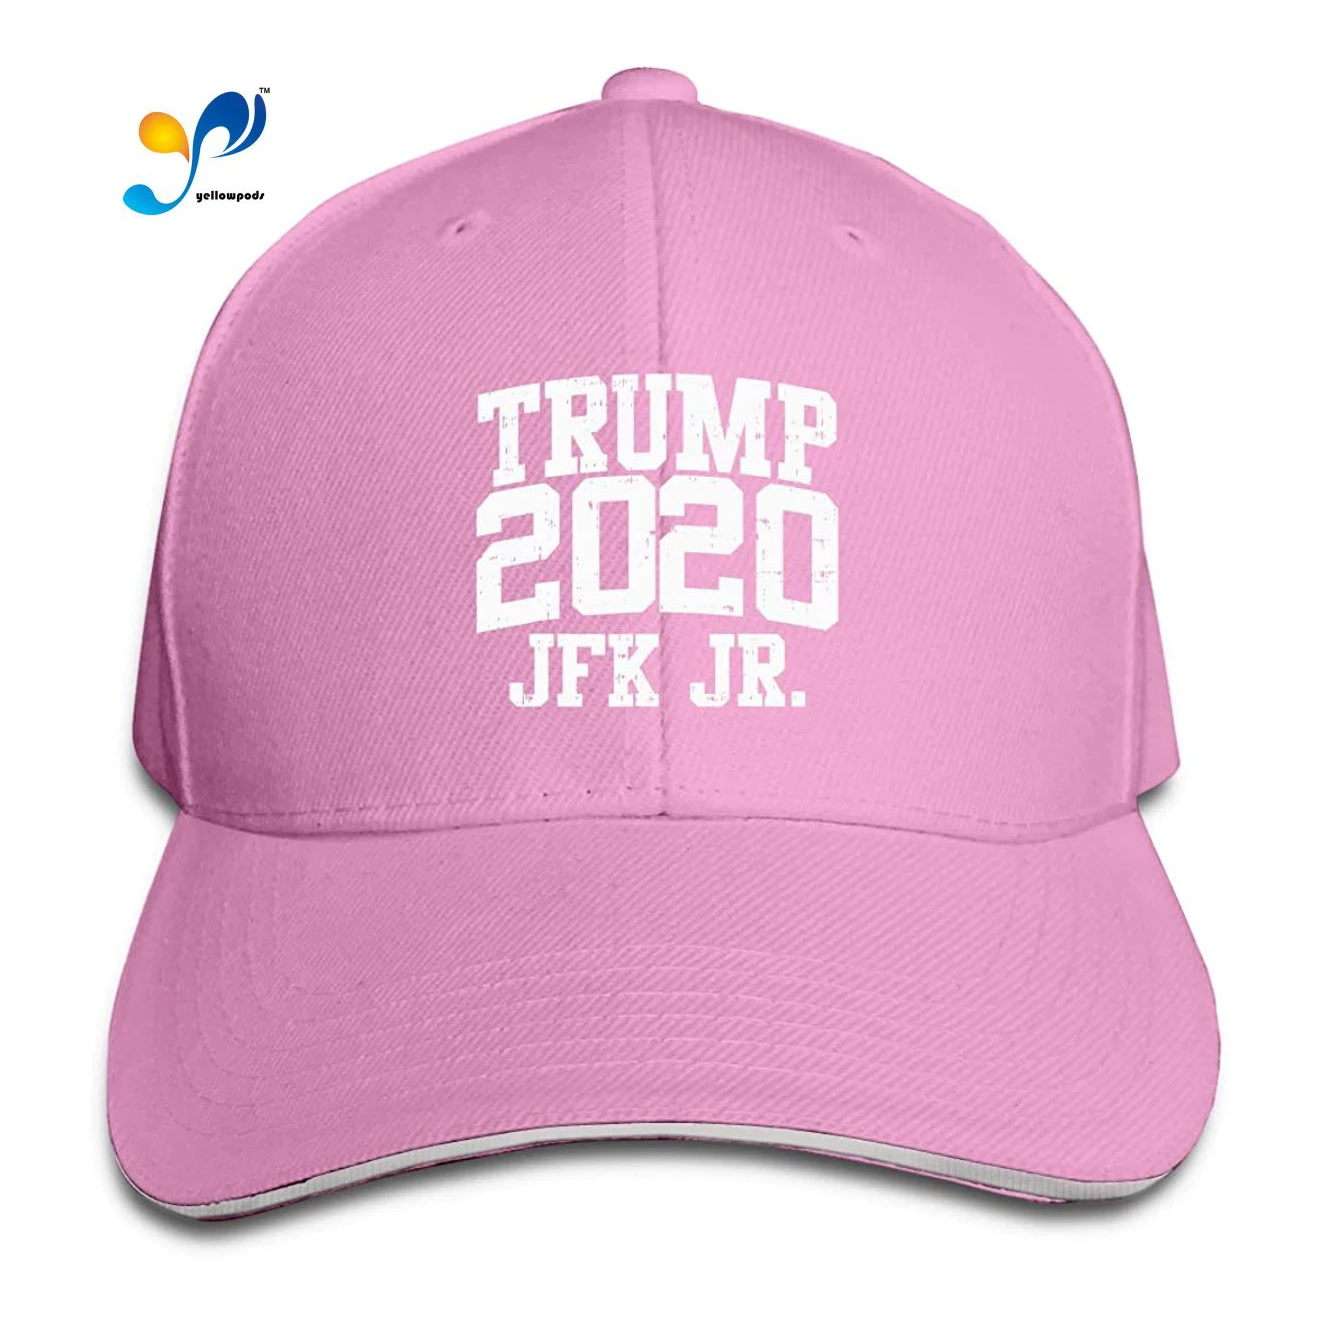 

Moto Gp Baseball Cap Trump 2020 JFK Jr Funny USA America President Election Men's Girl's Classical Hat Fashionable Peak Cap Hats